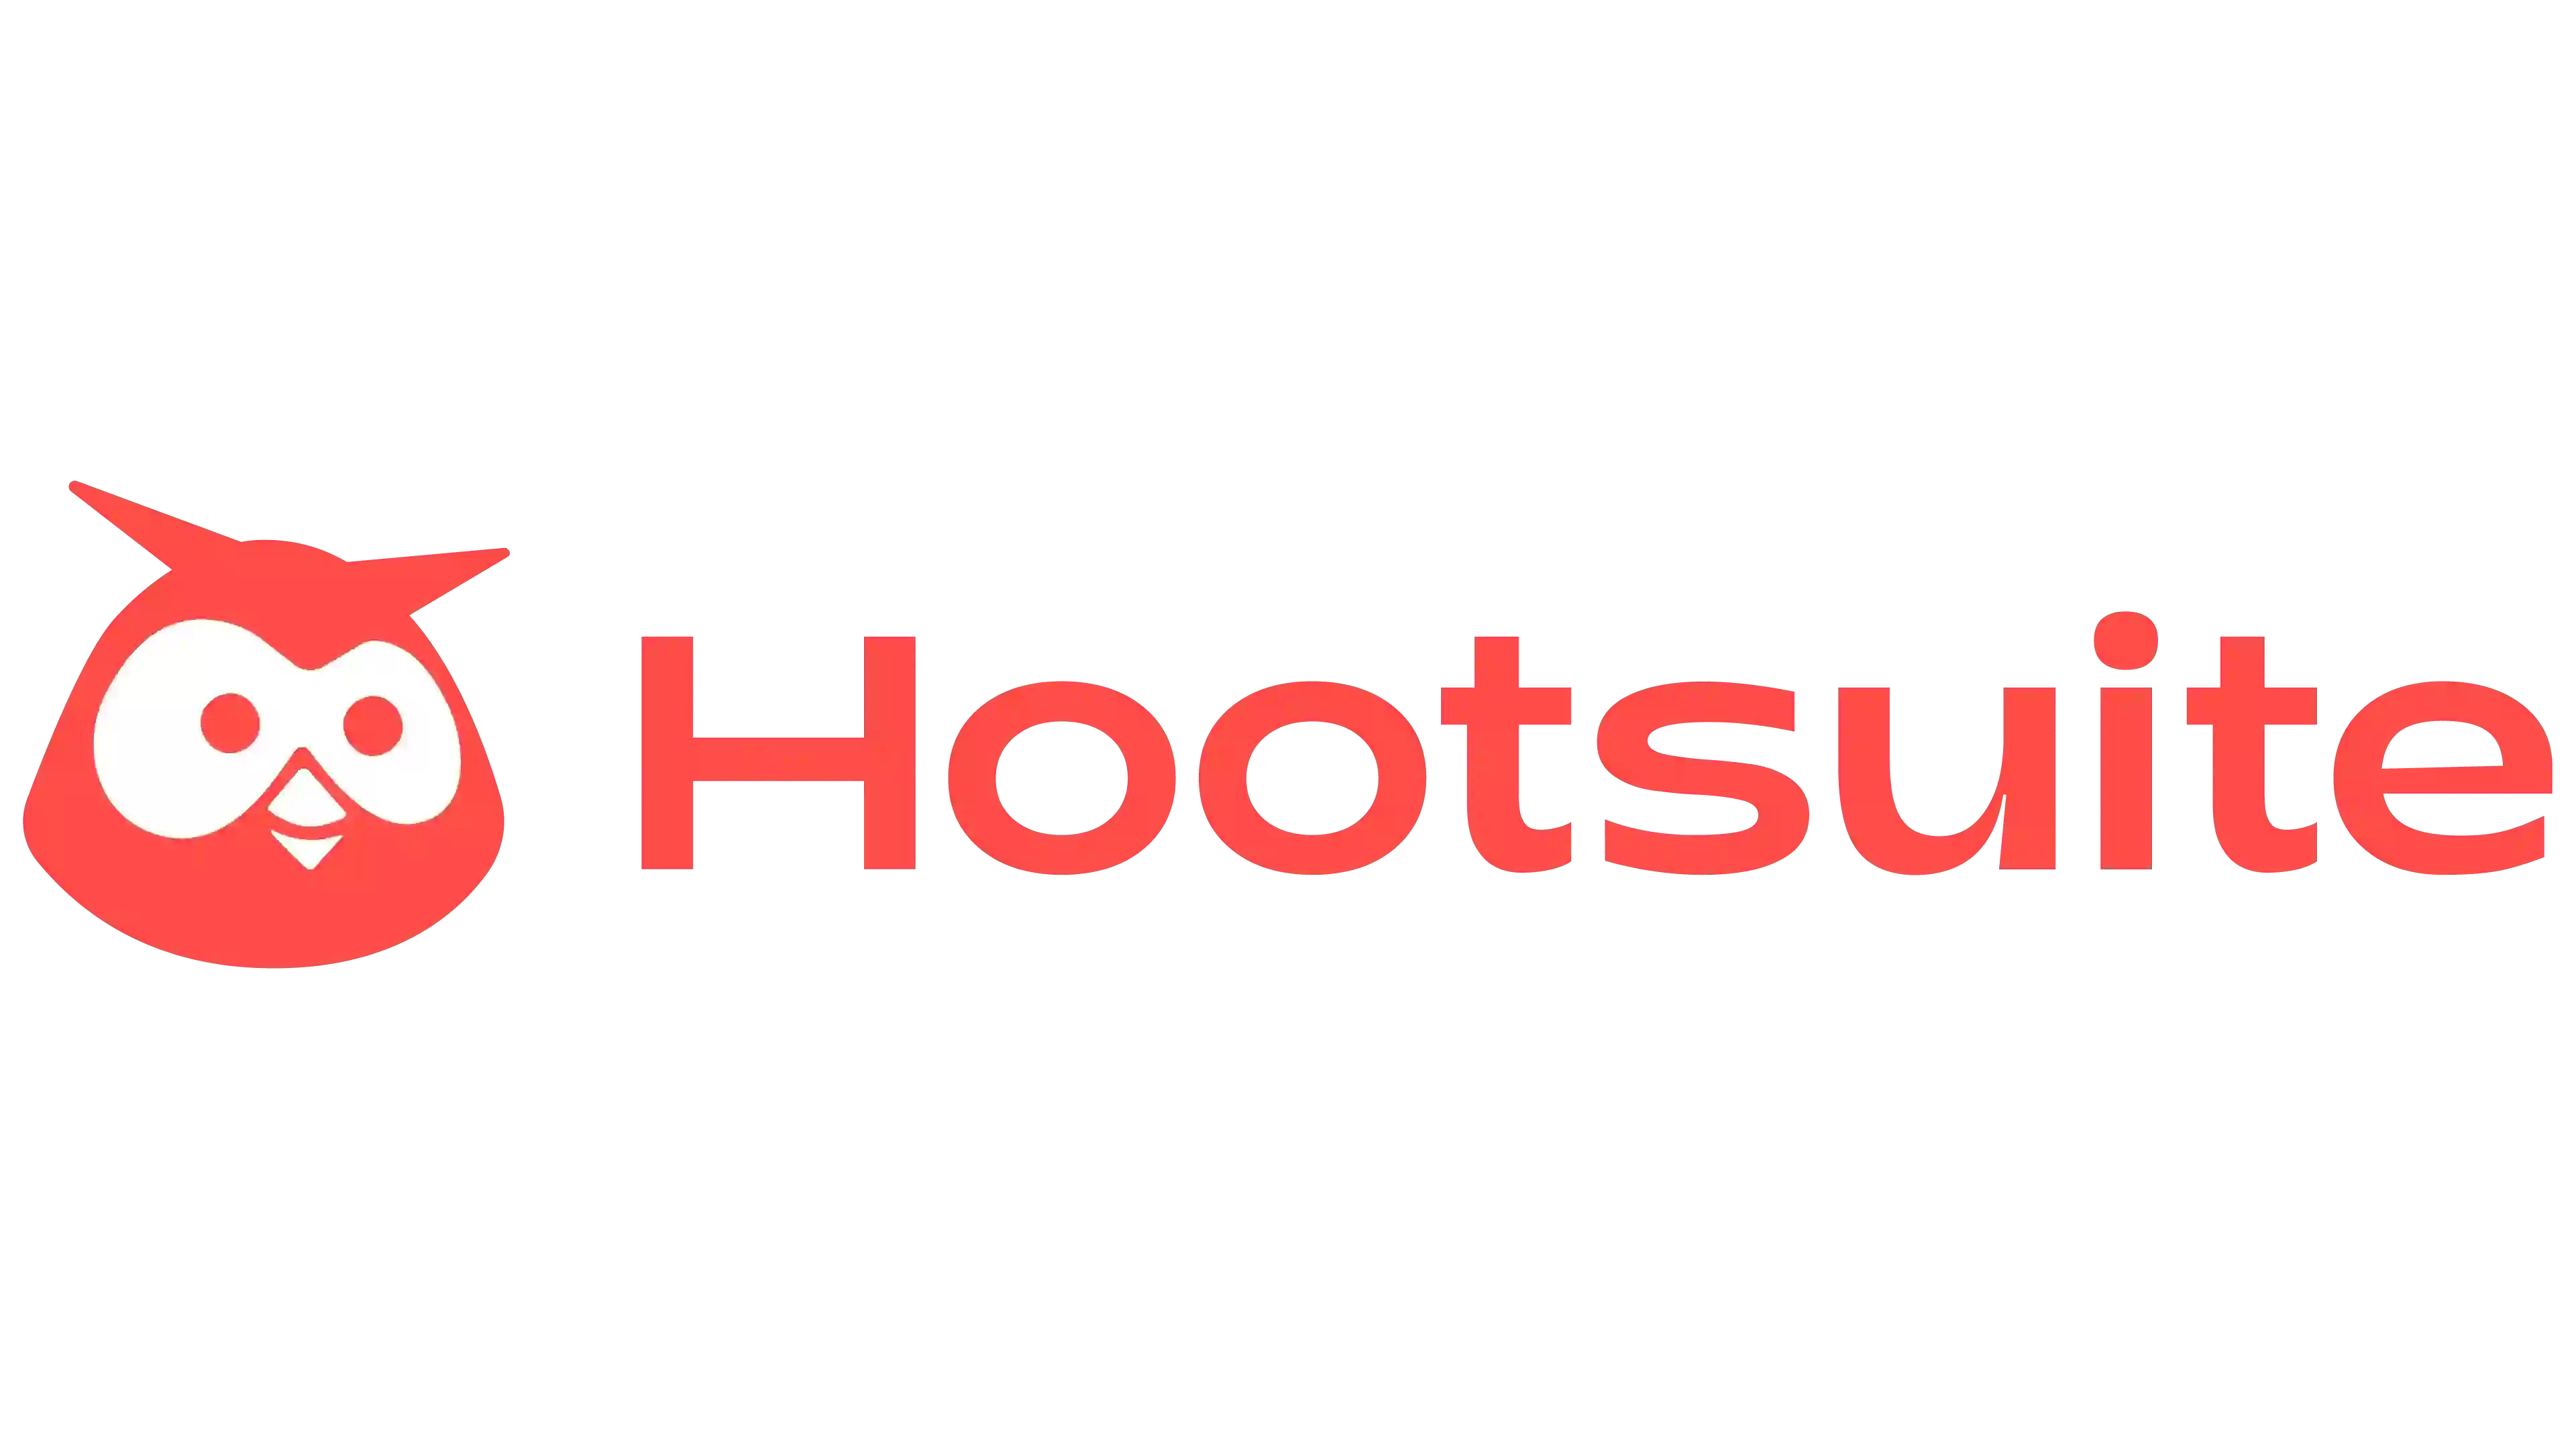 Hooksuite and Inventateq